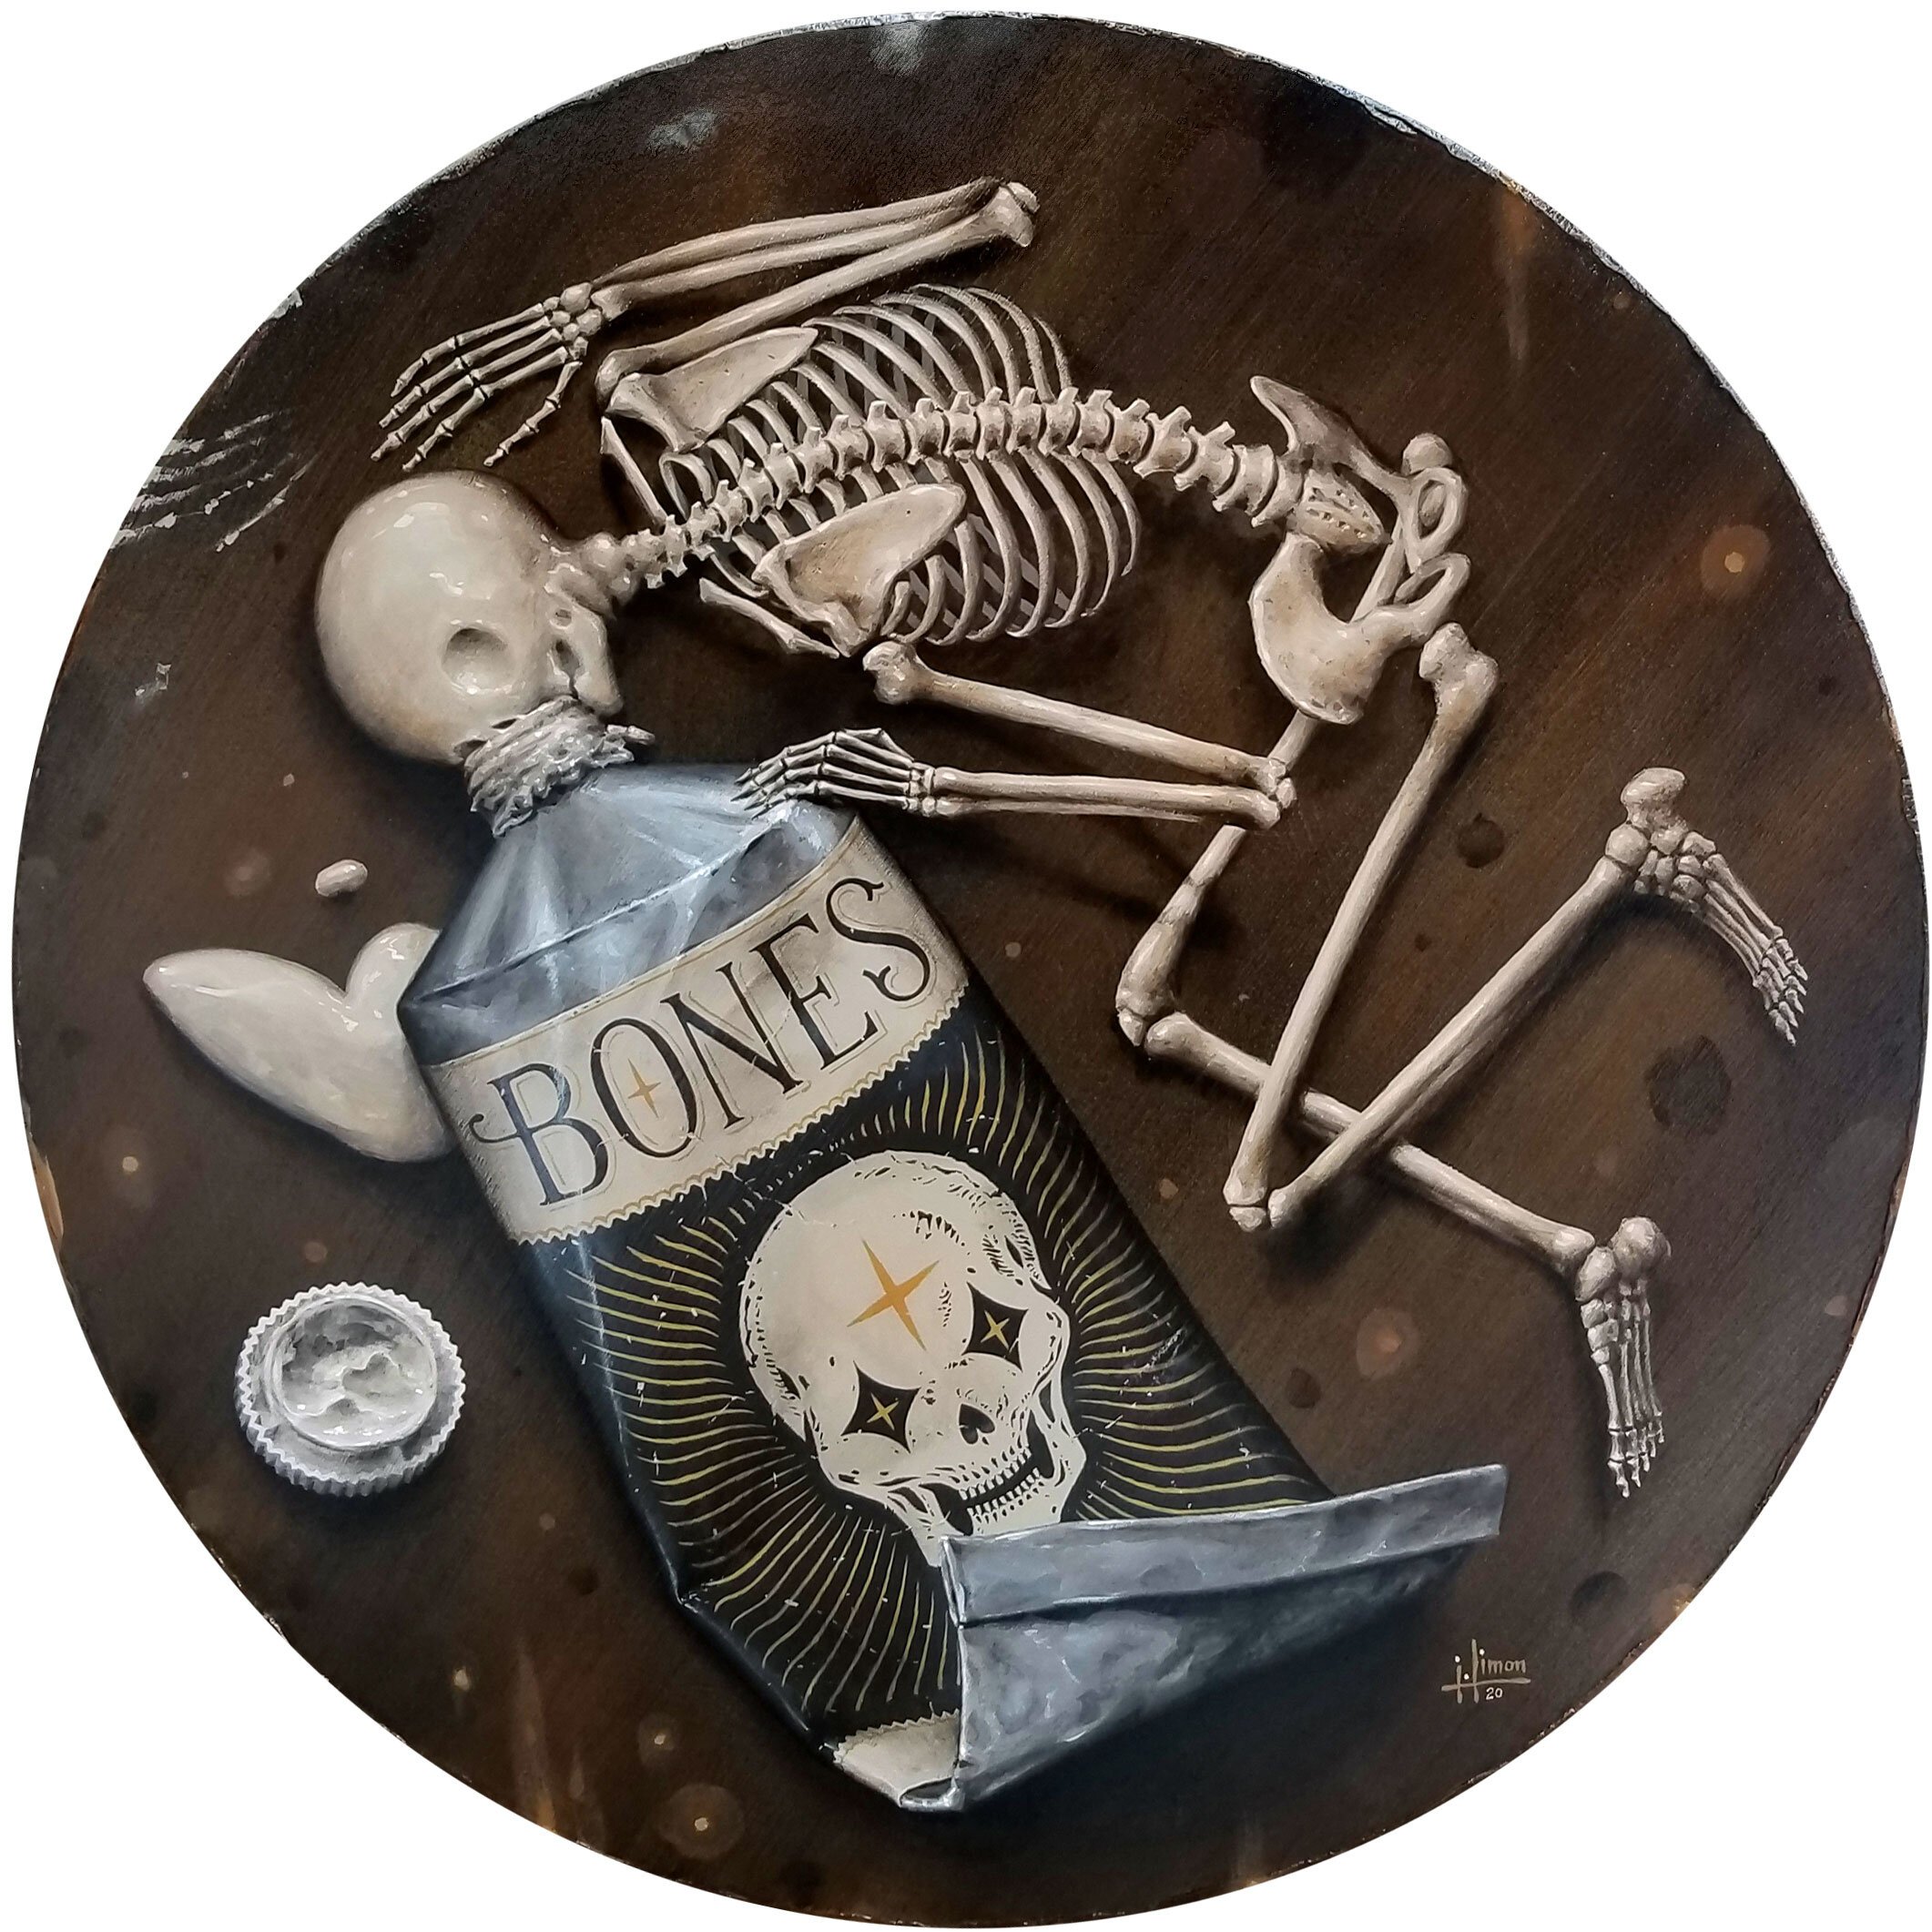 Made of Bones